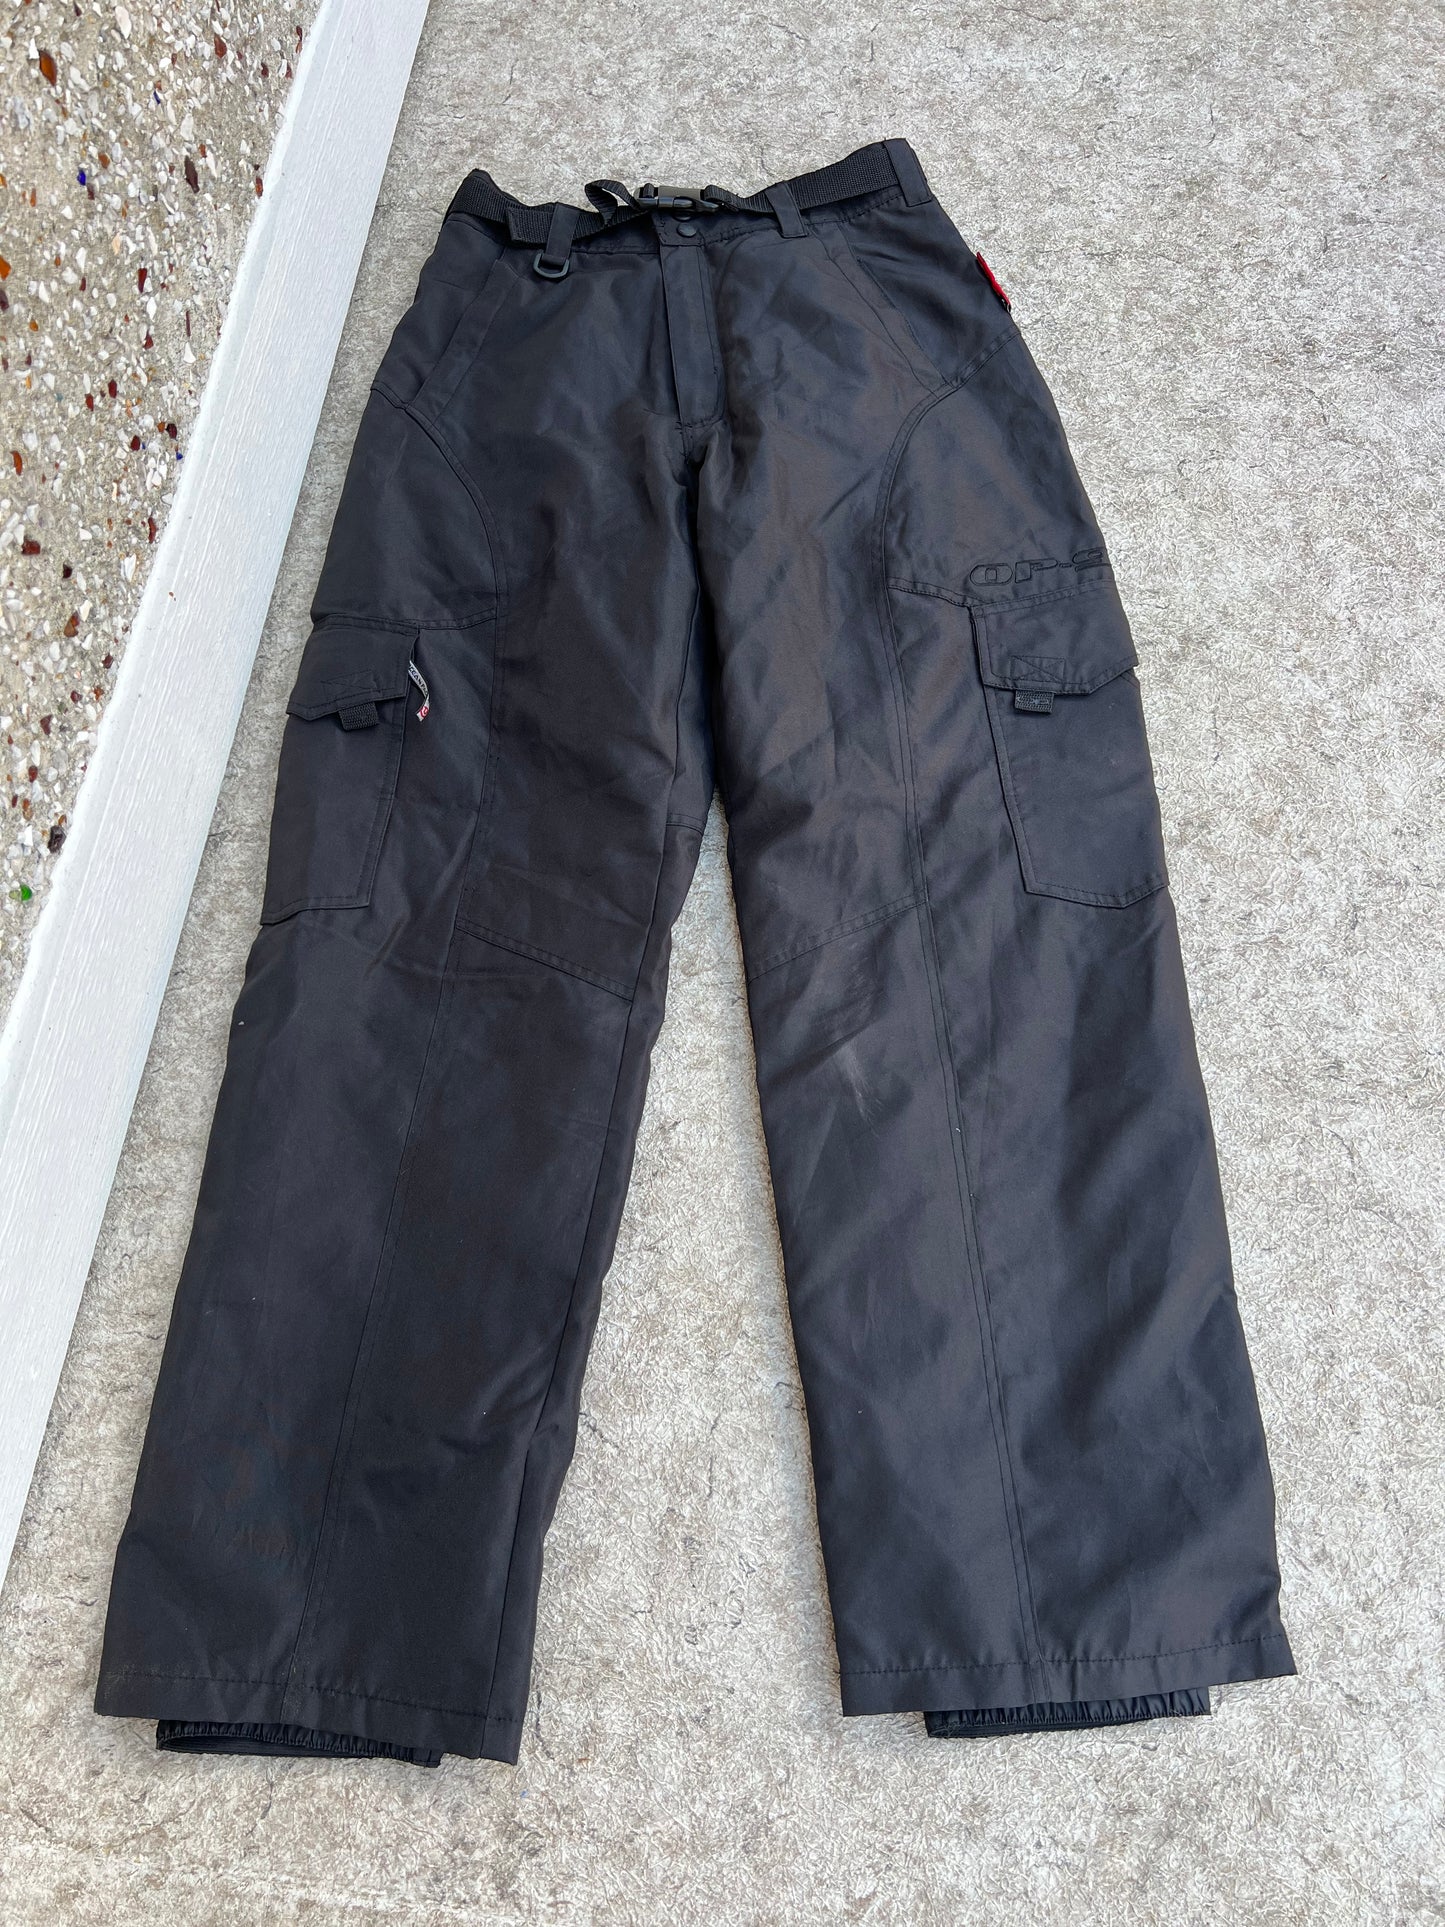 Snow Pants Men's Size Medium Black With Micro Fleece Lining Inside Excellent